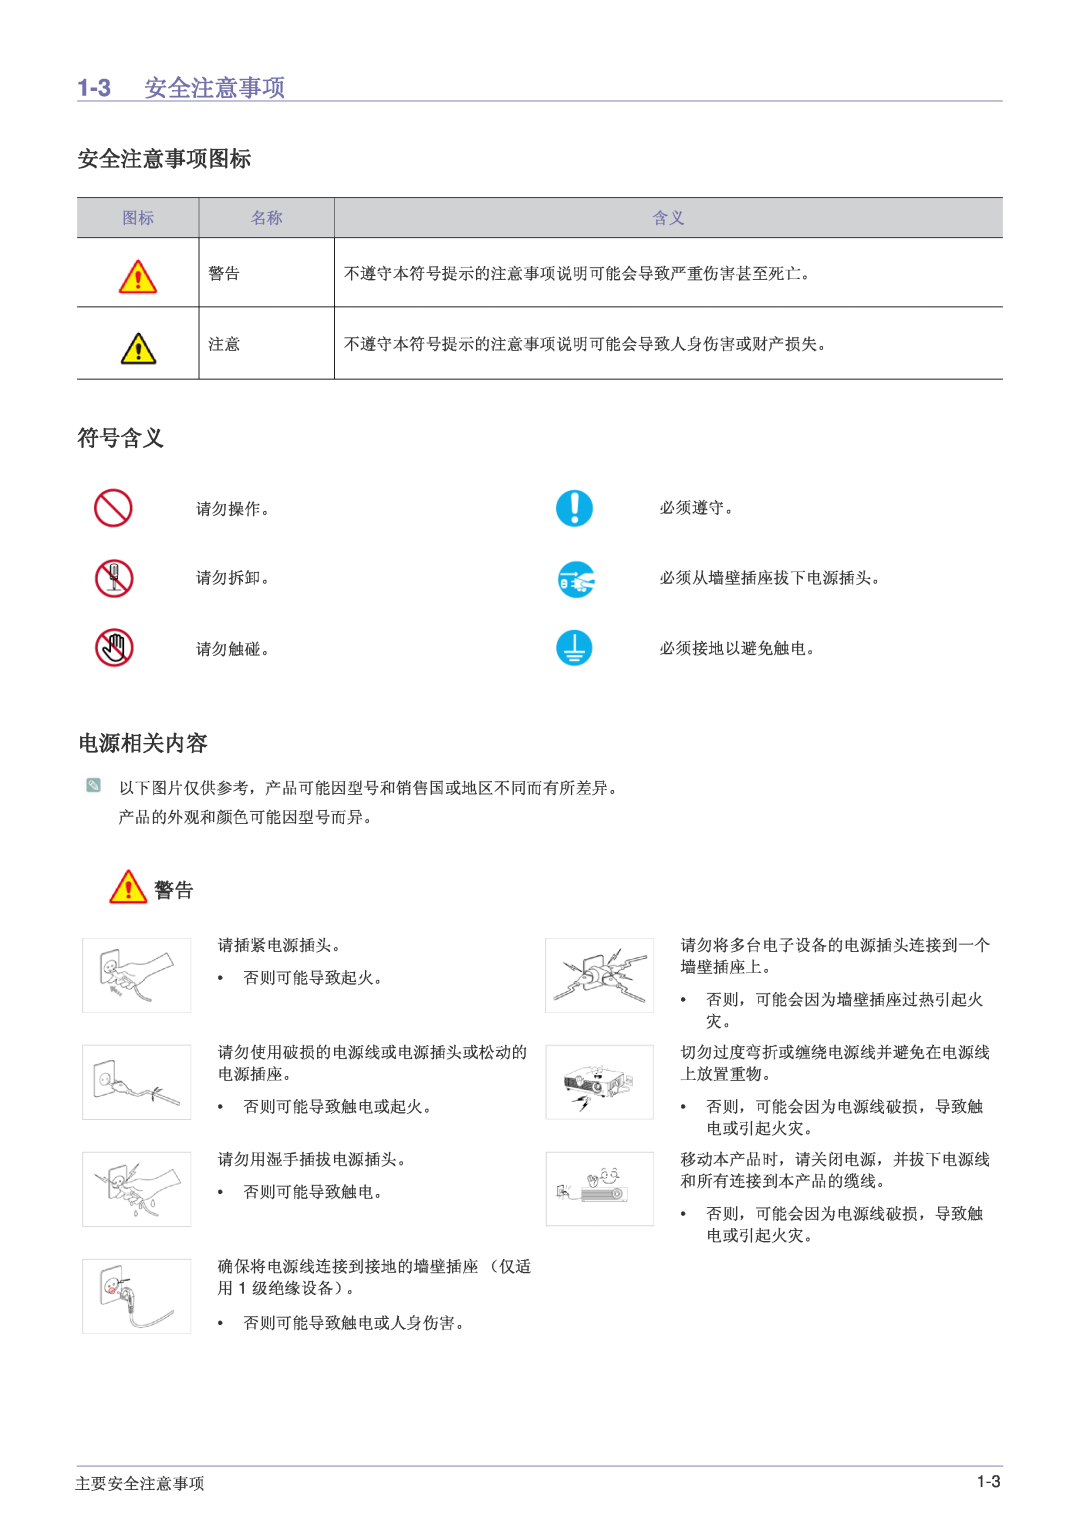 Samsung SP1005XWX/EN, SP1055XWX/EN manual 1-3 安全注意事项, 安全注意事项图标, 符号含义, 电源相关内容 